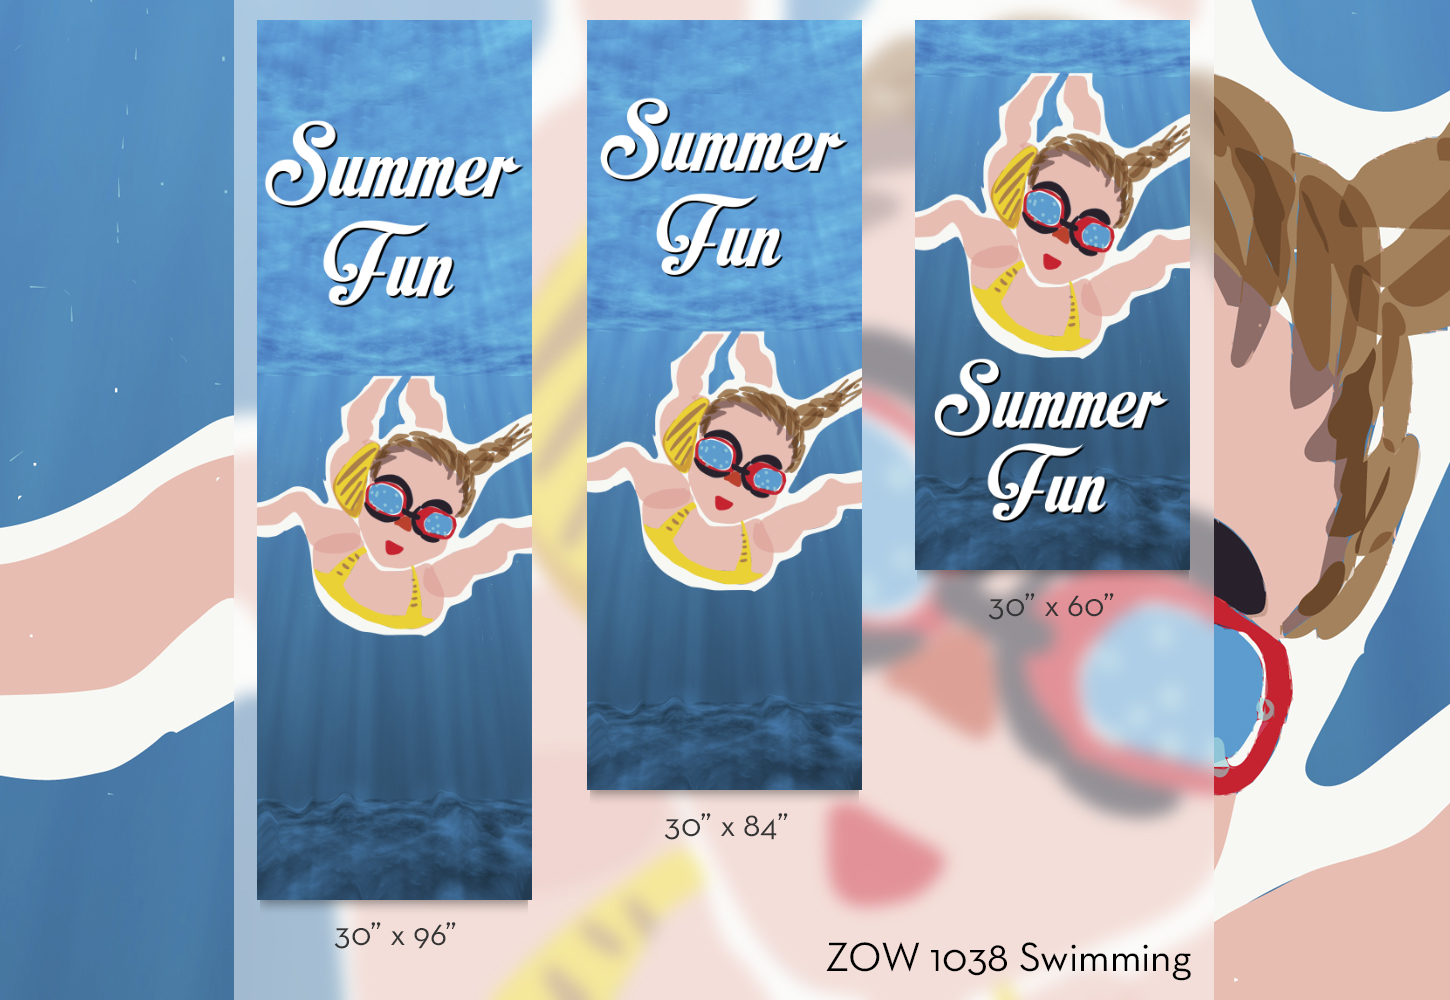 ZOW 1038 Swimming